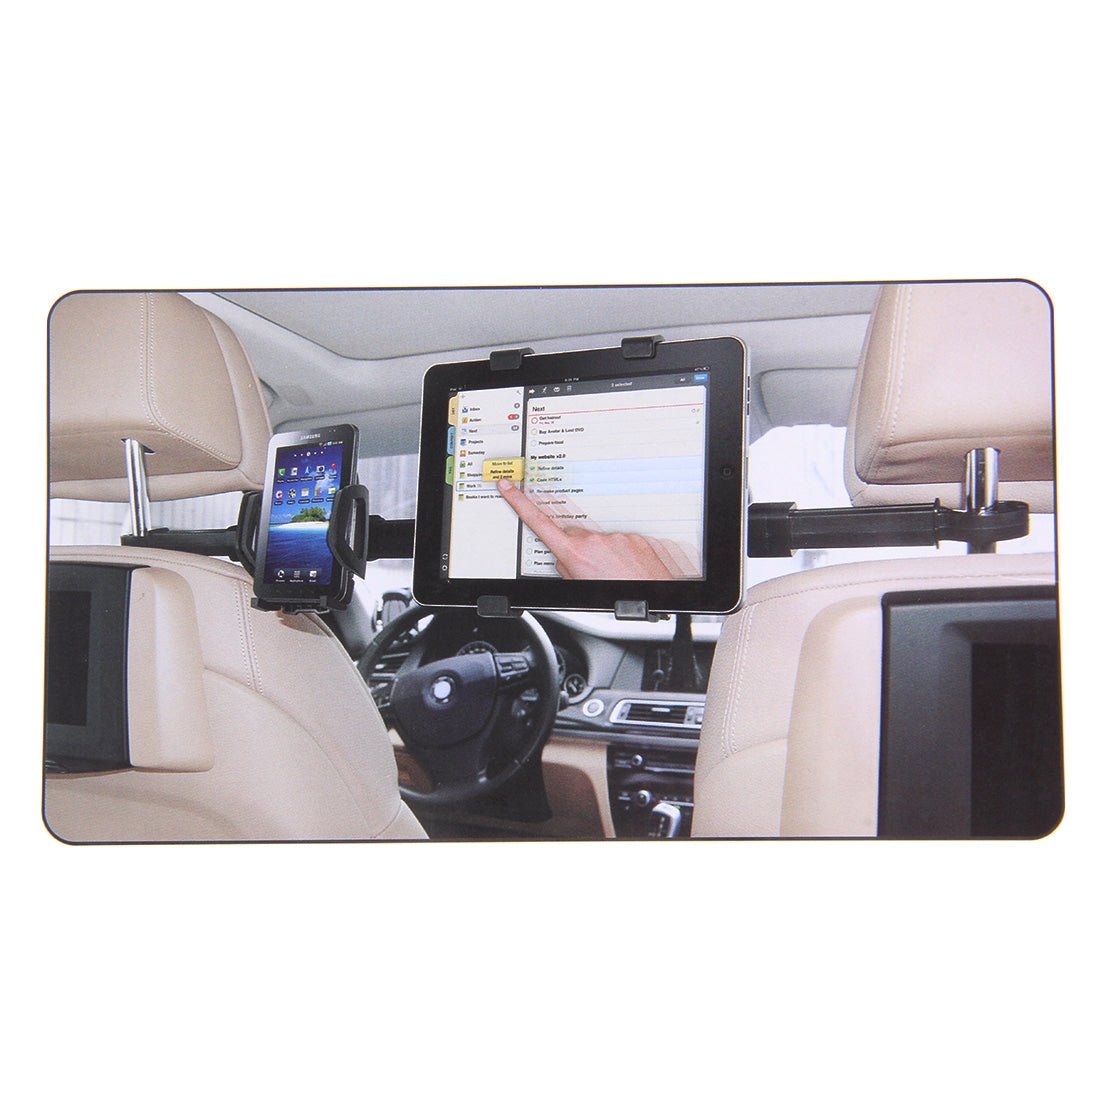 Autohalterung Kopfstütze Halterung für Handy ,Tablet - Calitronshop.com